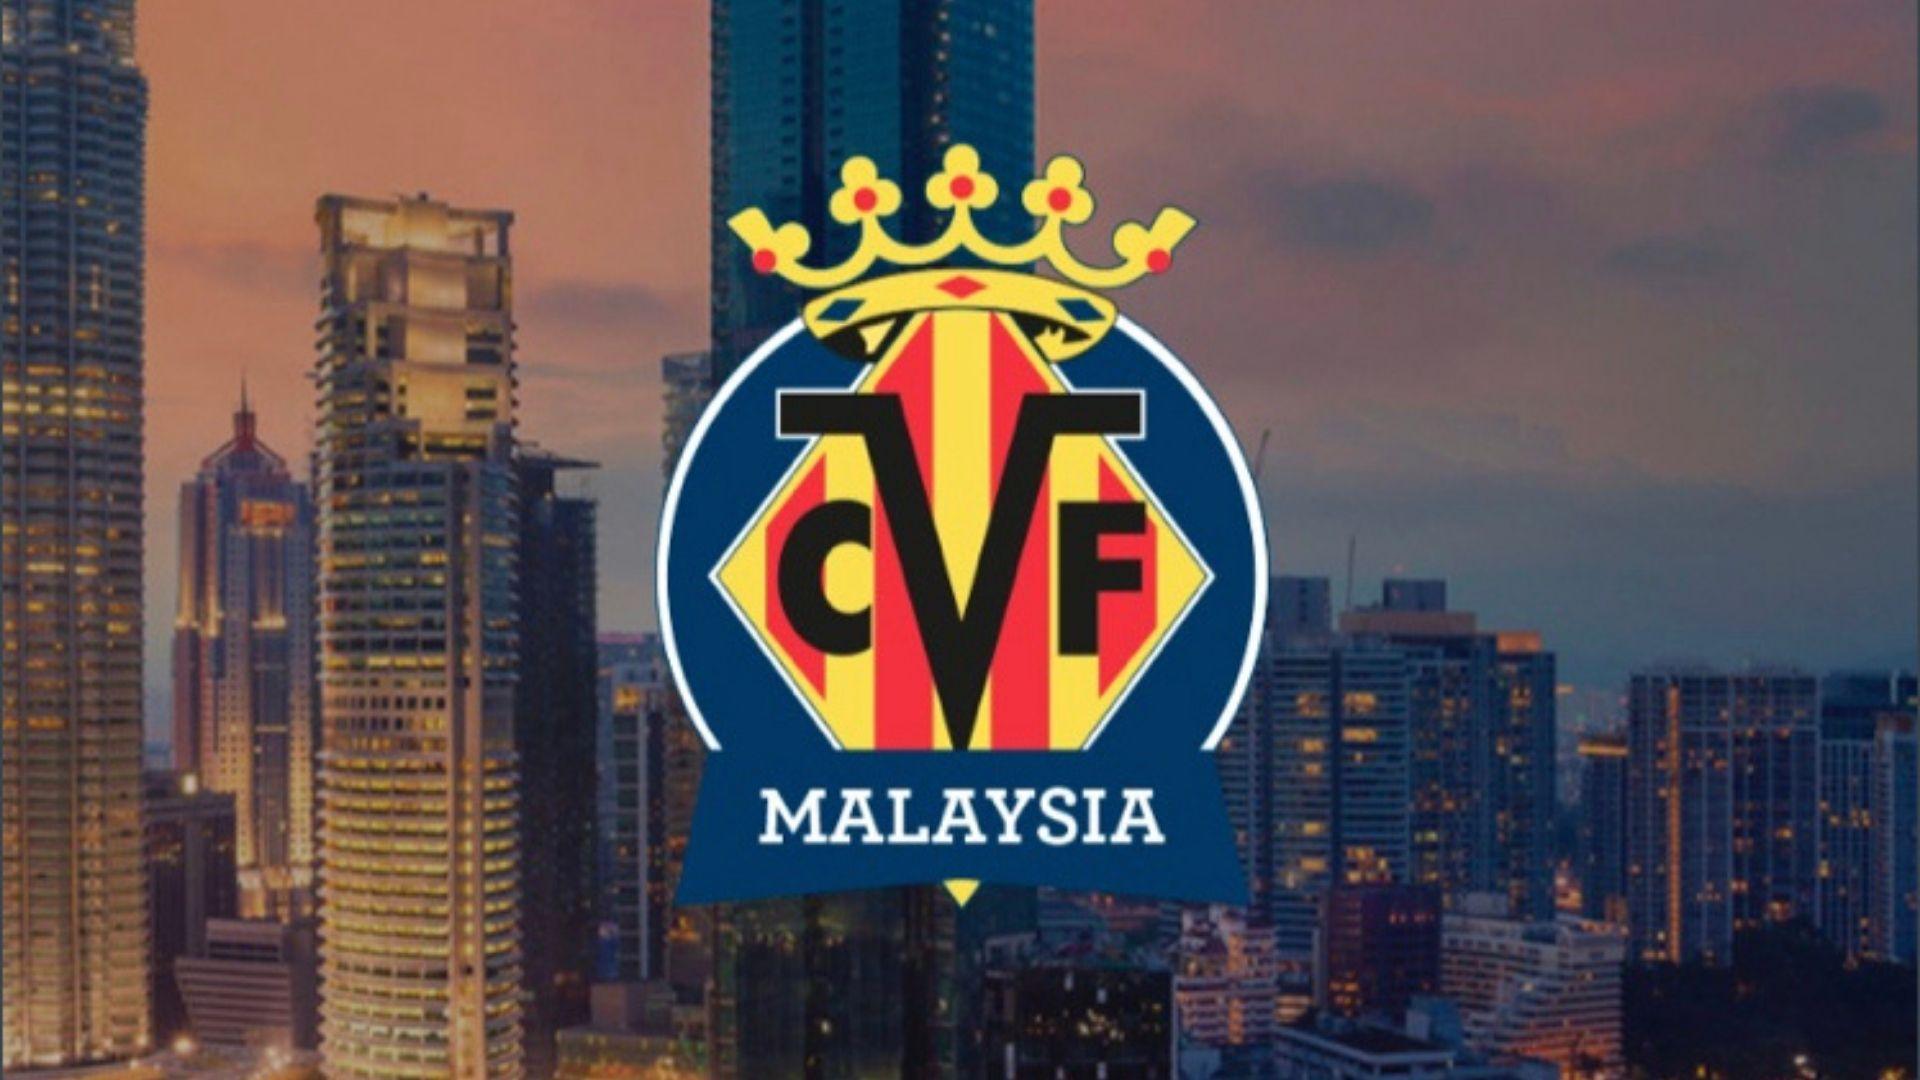 Vlareal MAS Villareal Bakal Buka Akademi Bola Sepak Di Malaysia